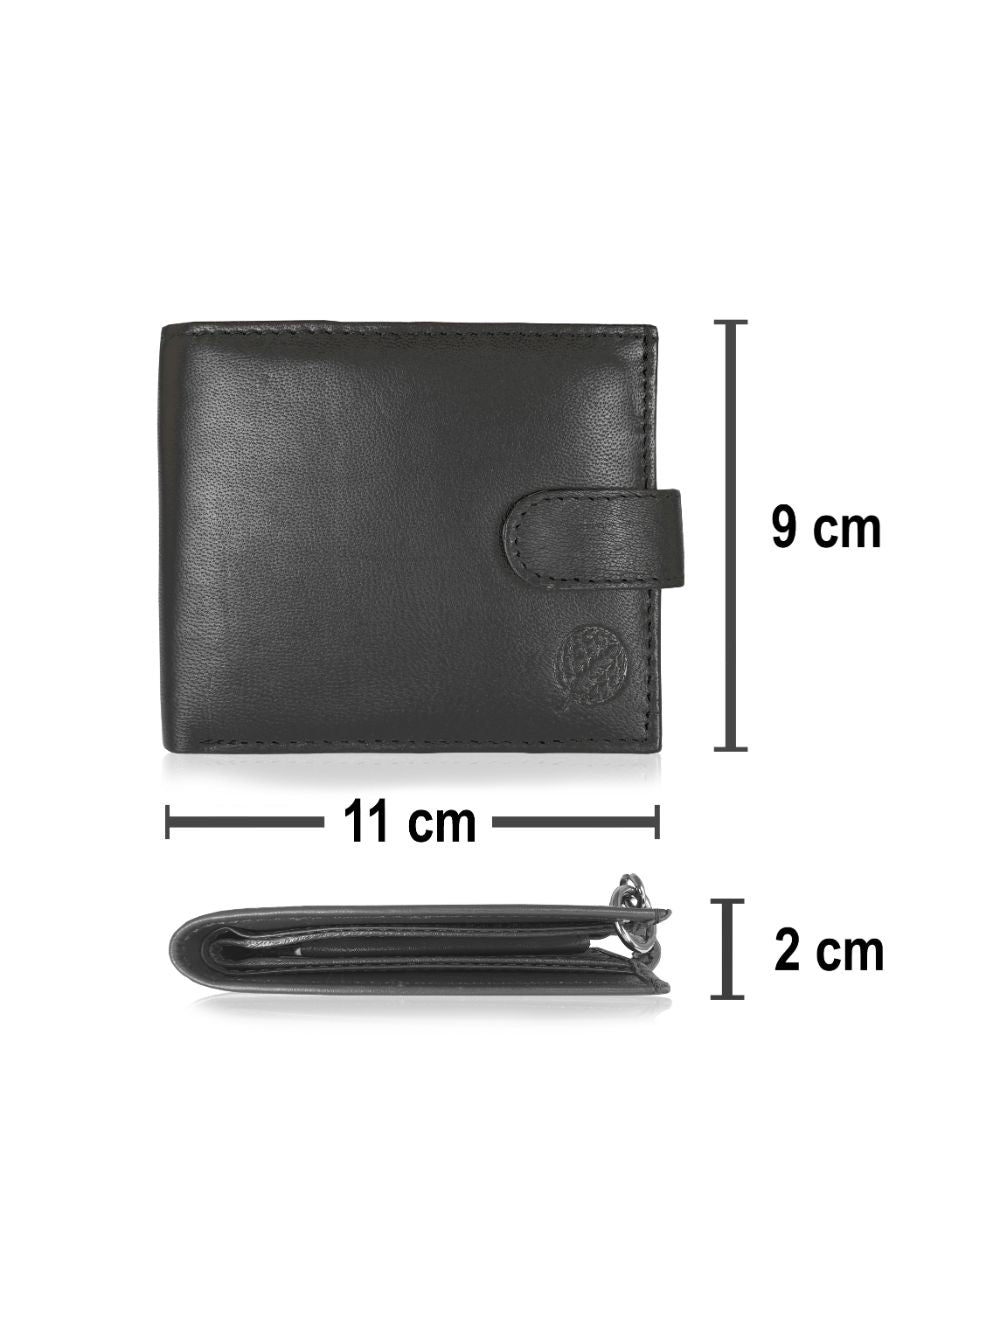  Roamlite Mens chained wallet black leather rl506 Measurements